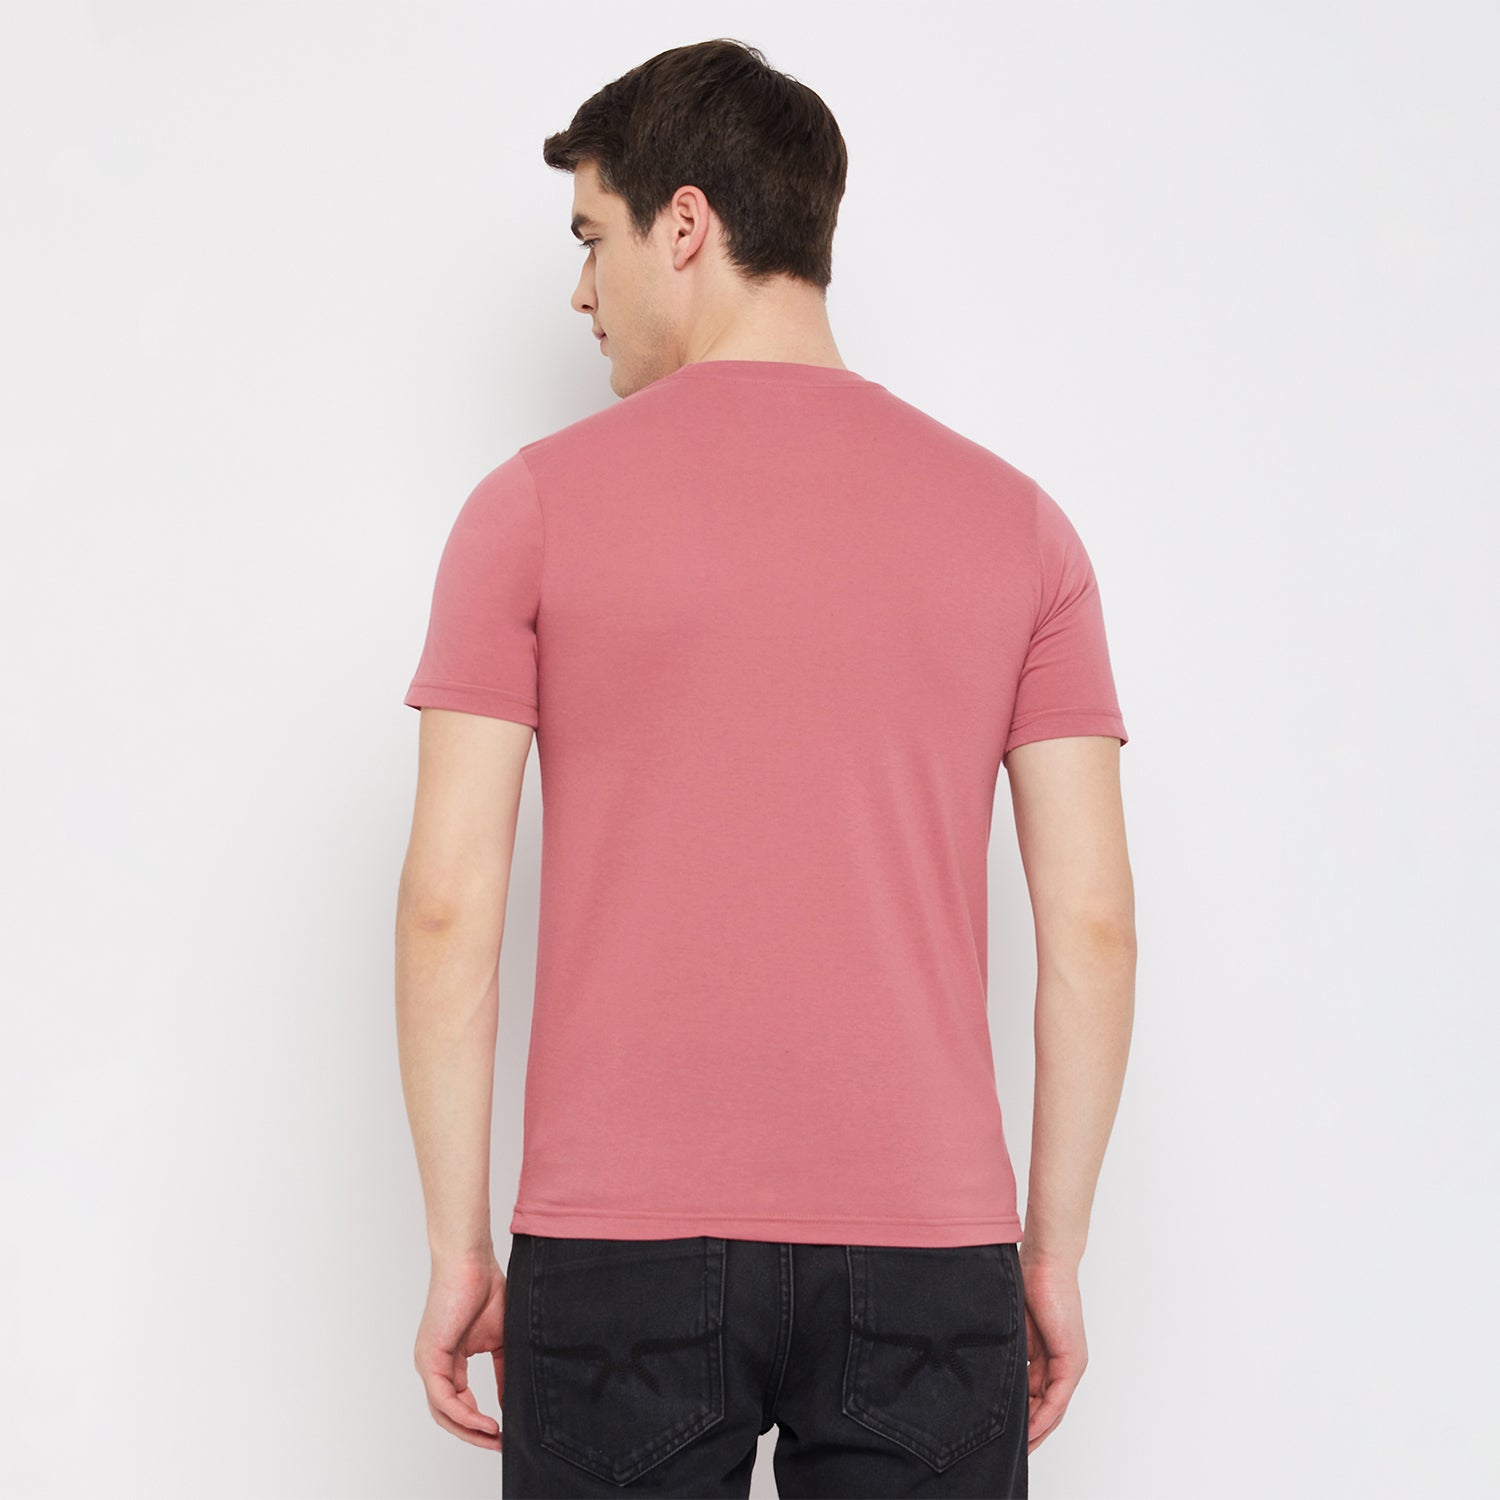 LivFree Men's T-Shirt Round Neck Half Sleeves in Printed pattern  - Onion